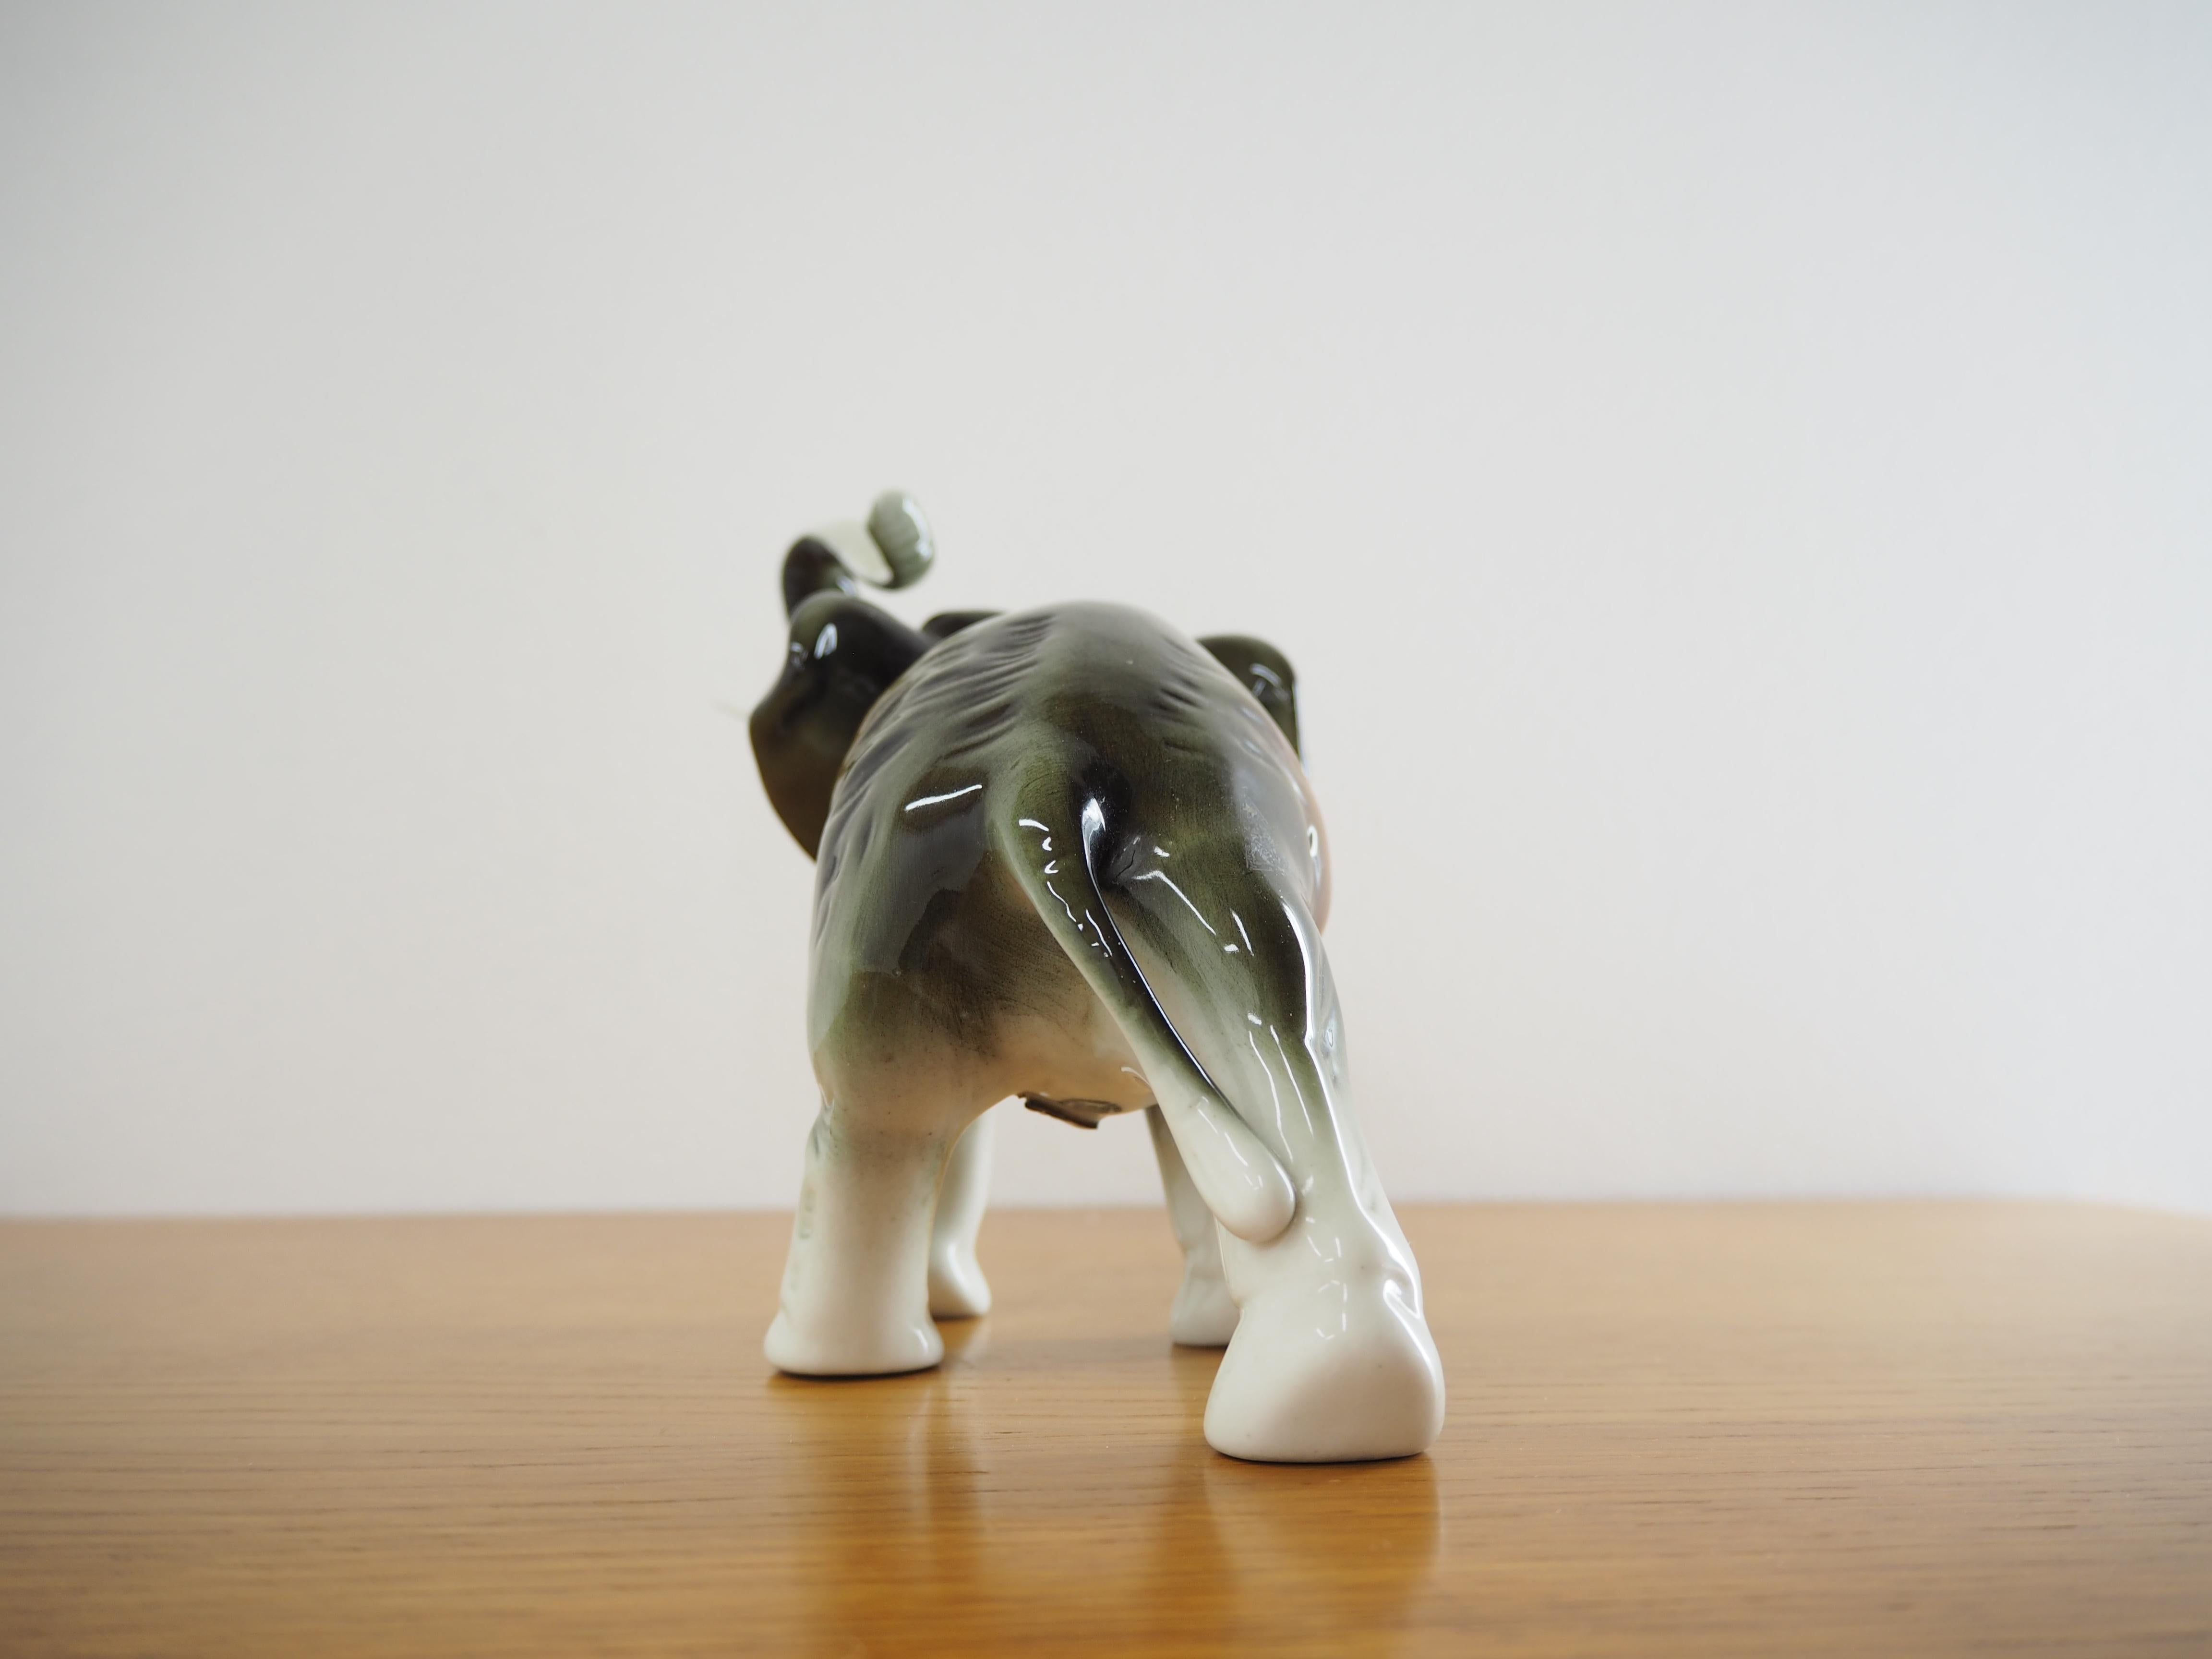 Czech Midcentury Porcelain Sculpture of Elephant from Royal Dux, 1960s